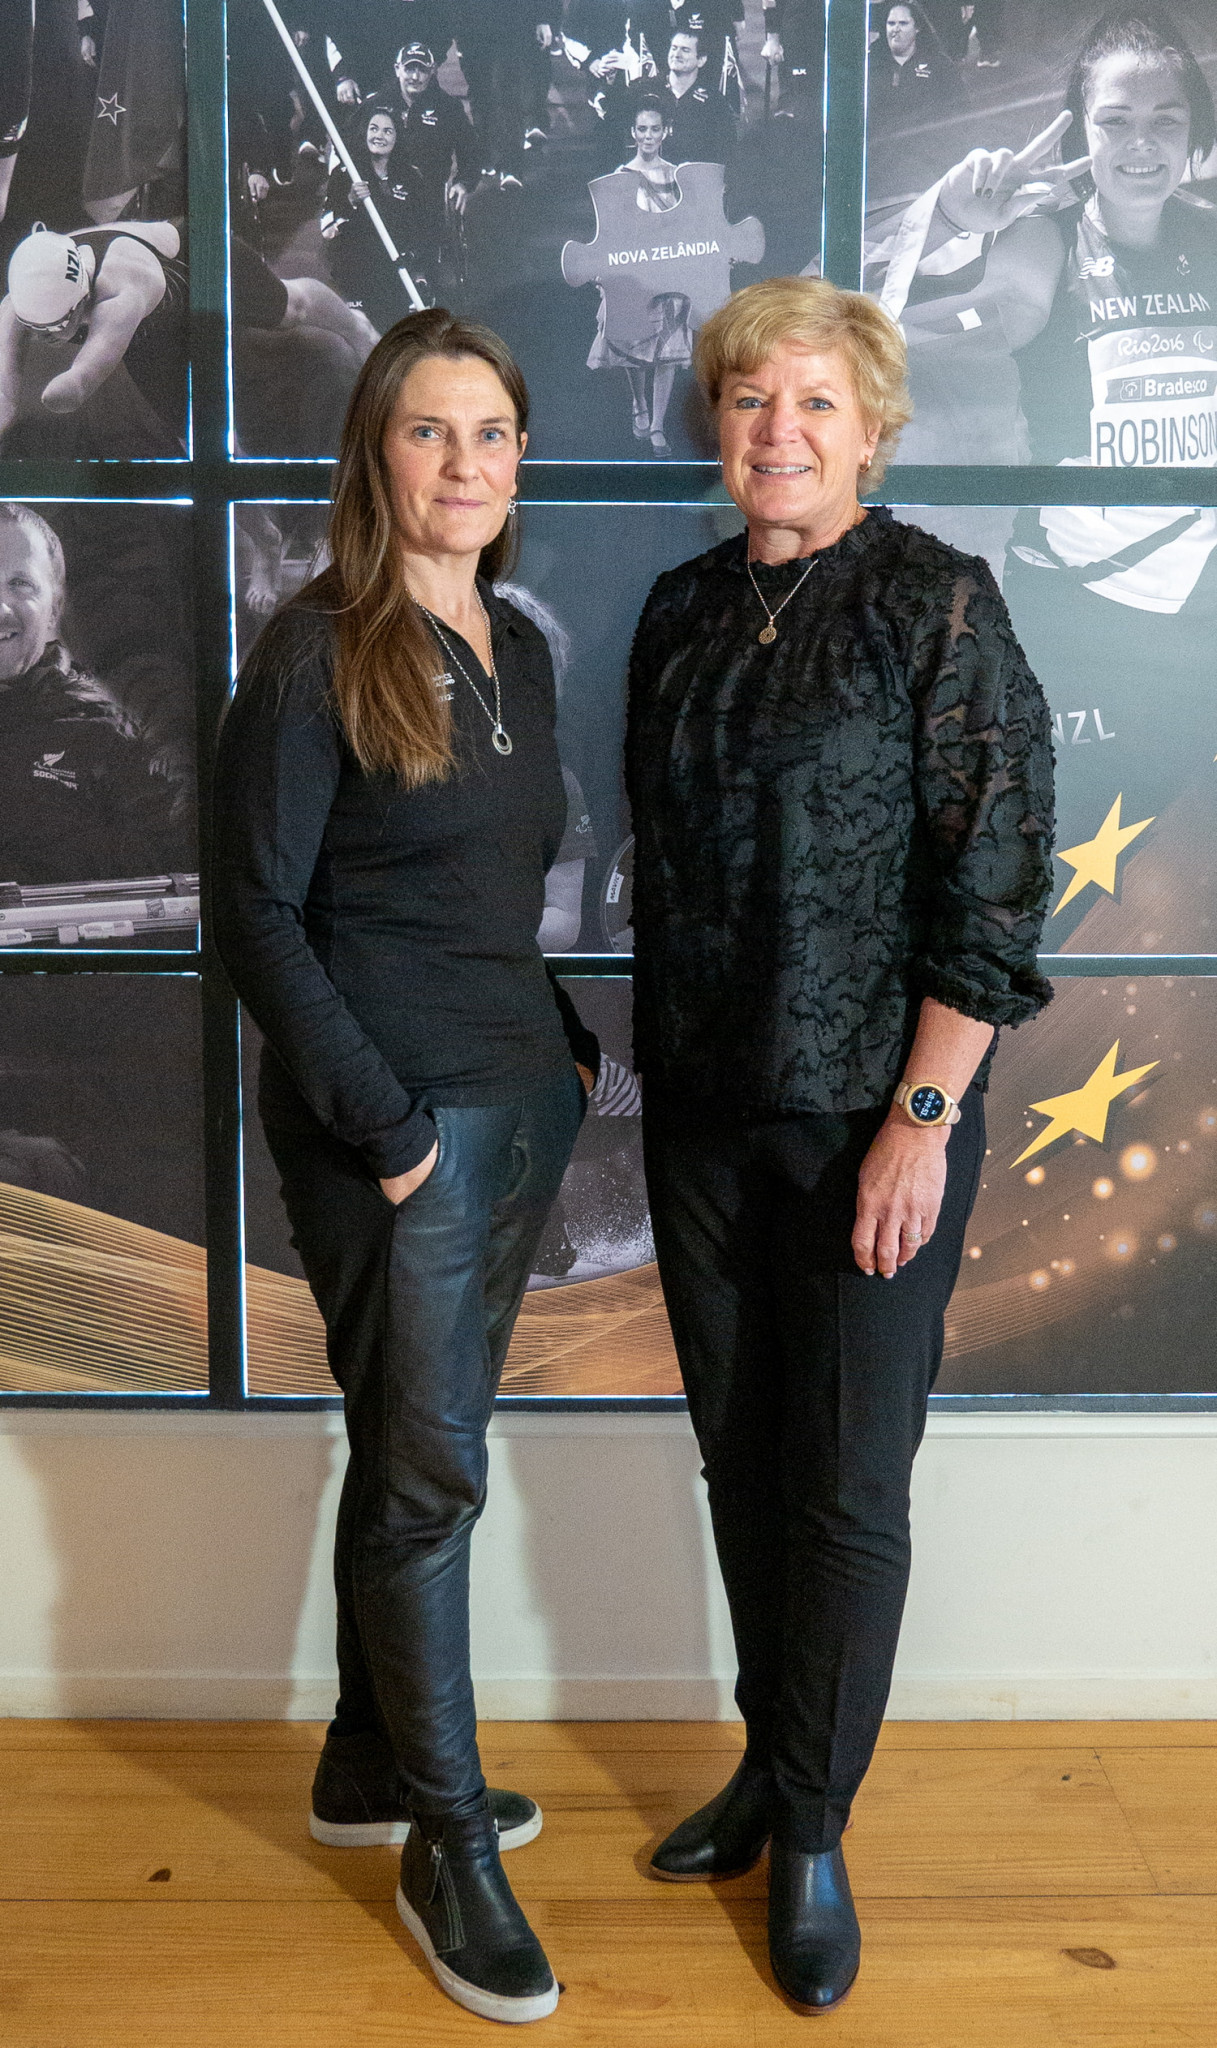 Lynette Grace, left, will assist Bates as the Deputy Chef de Mission ©Paralympics New Zealand